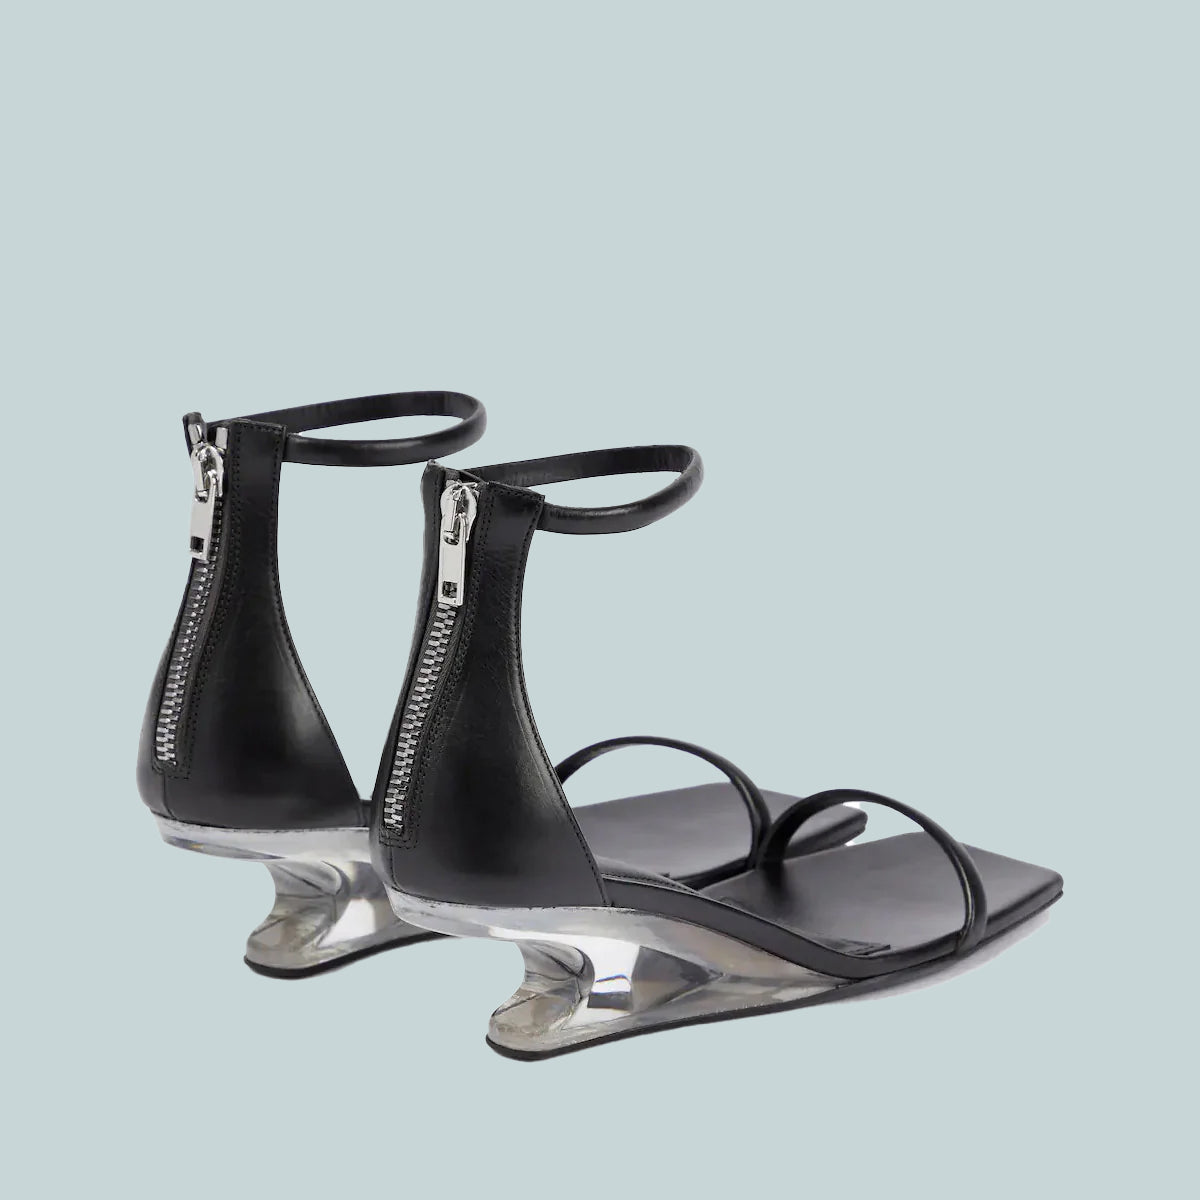 Cantilever sandals